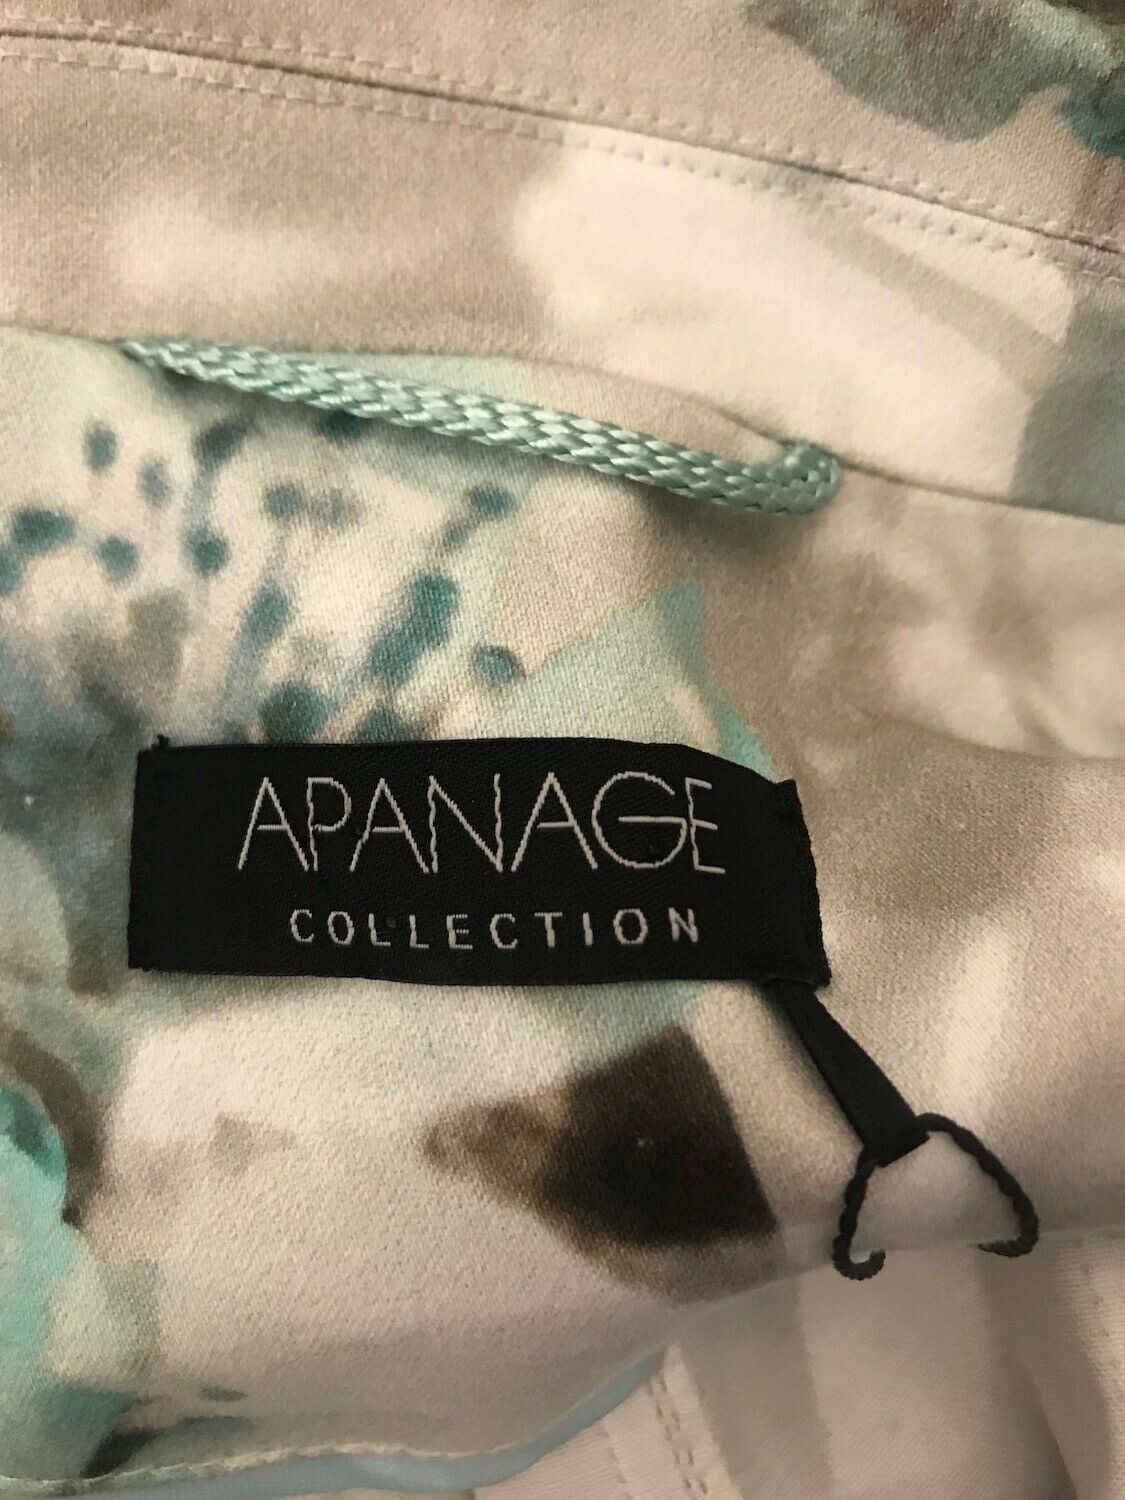 Apanage Womens White, Blue & Grey Floral Jacket BNWT RRP £165 UK 10 US6 EU 38 IT 42 Timeless Fashions